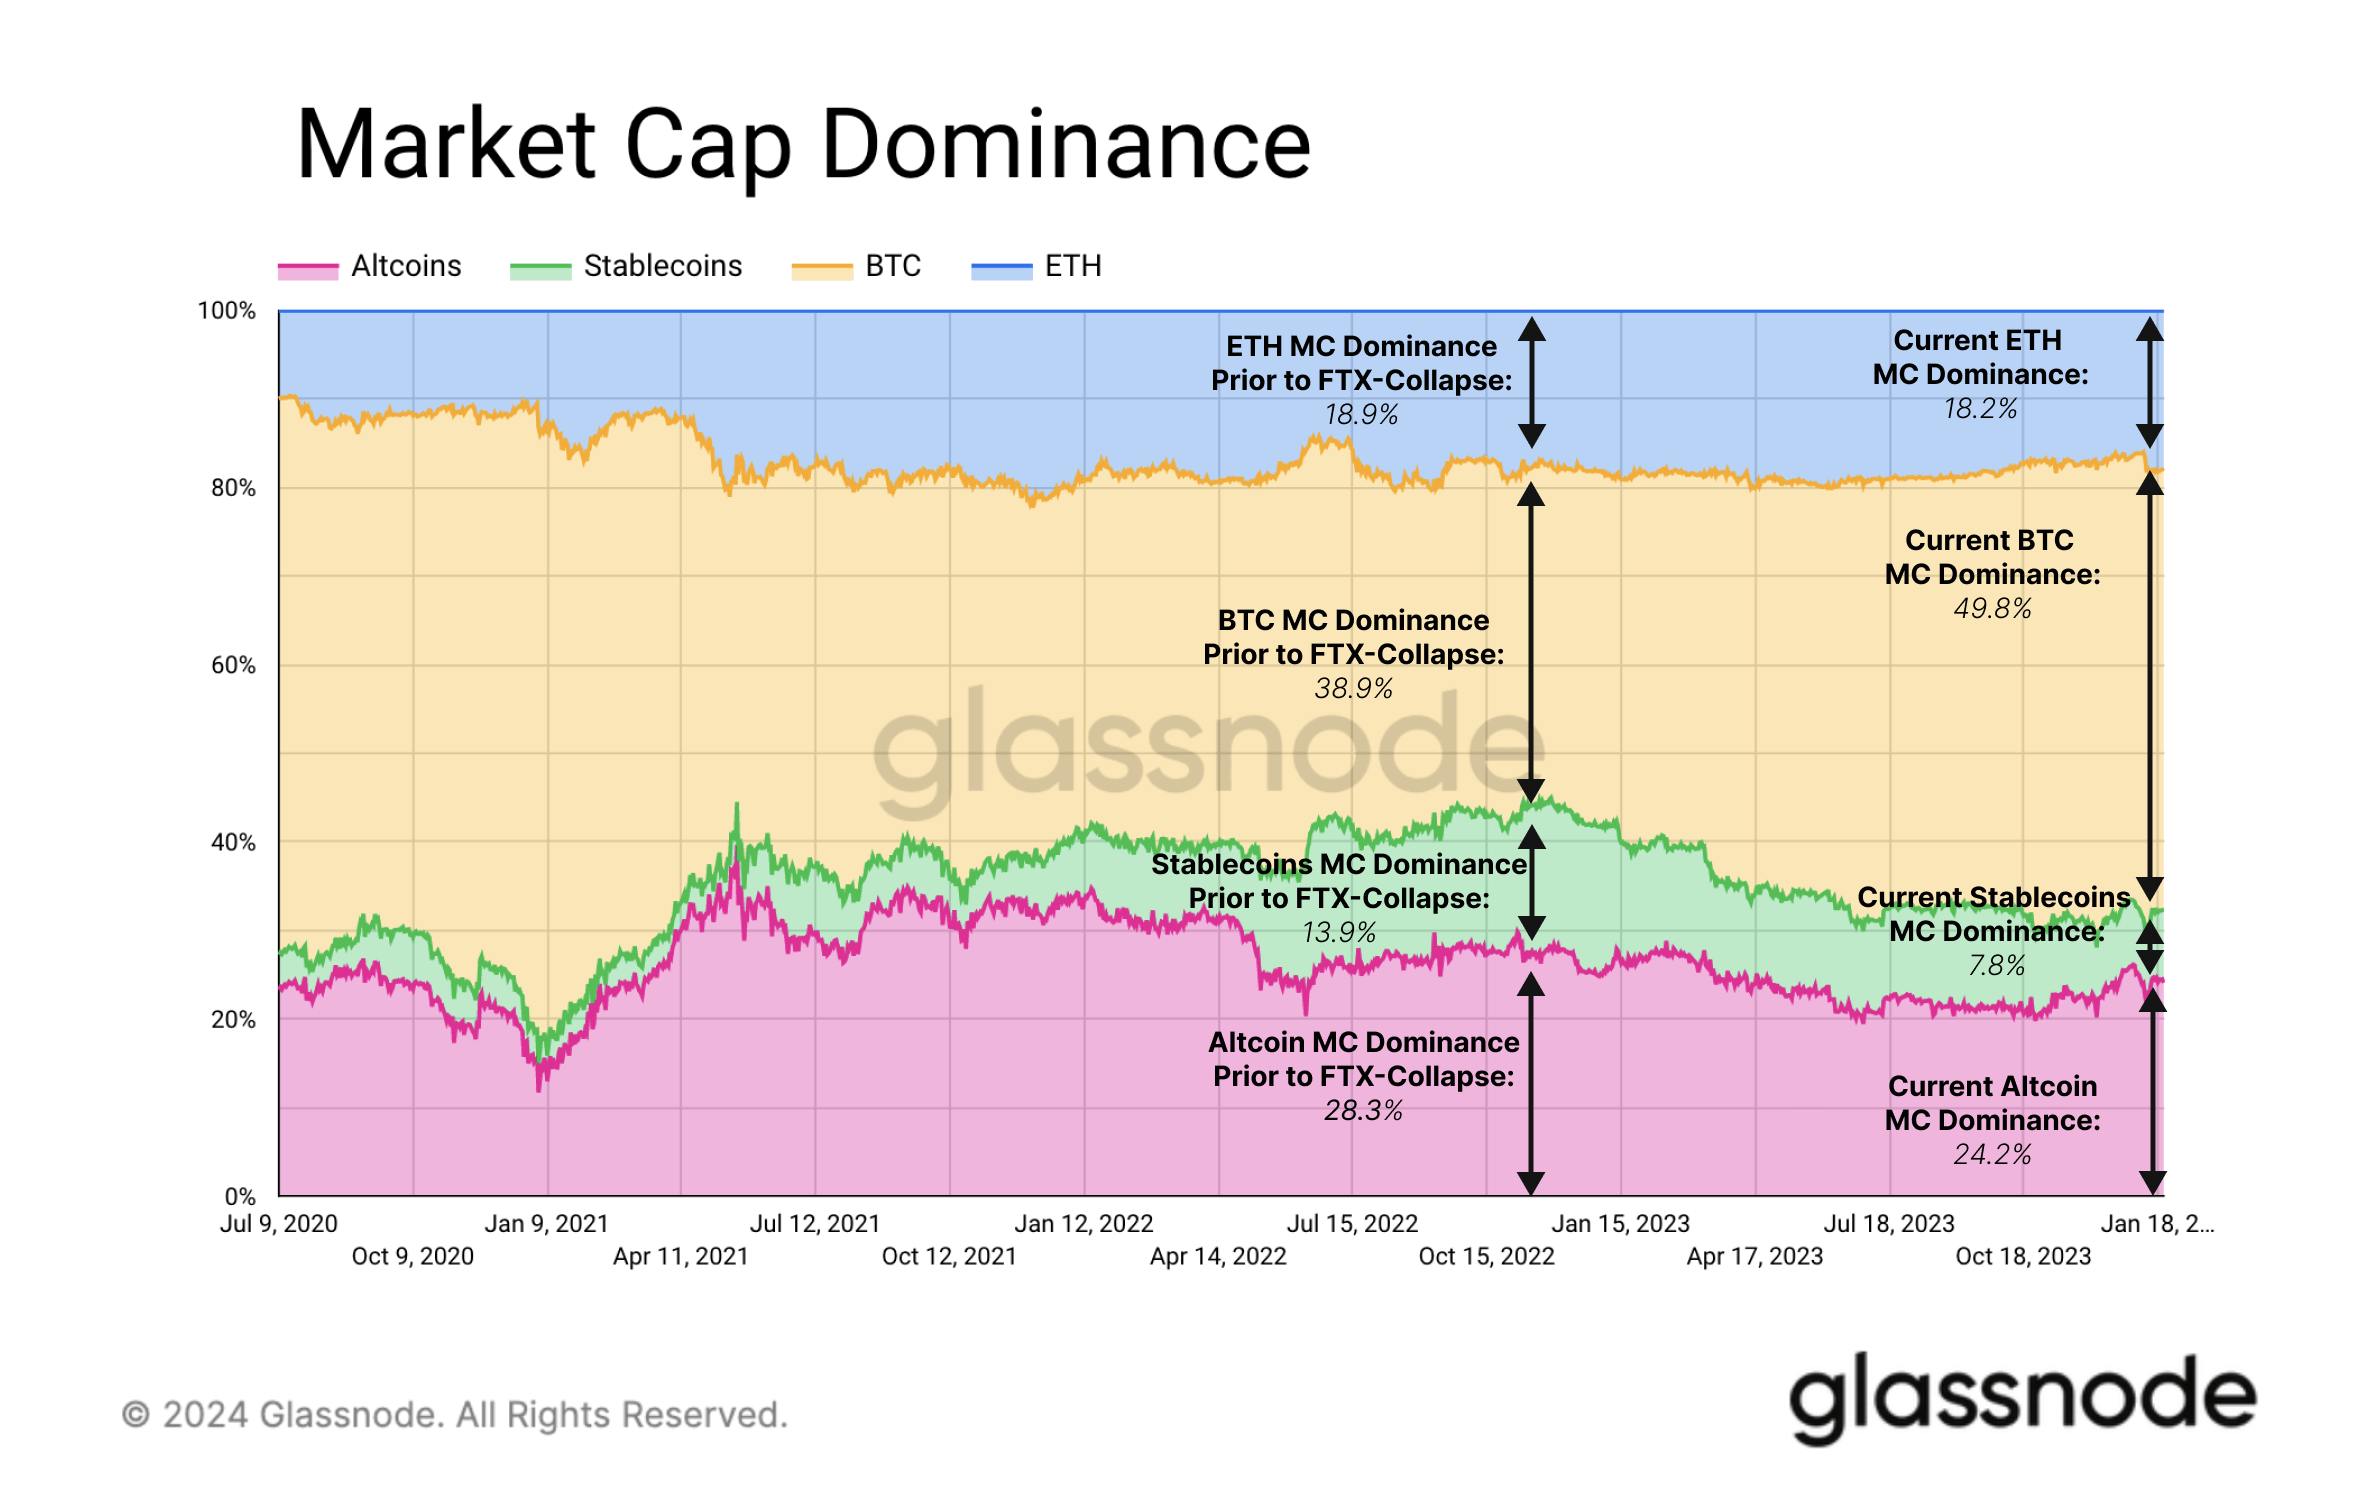 Ethereum Market Cap Dominance